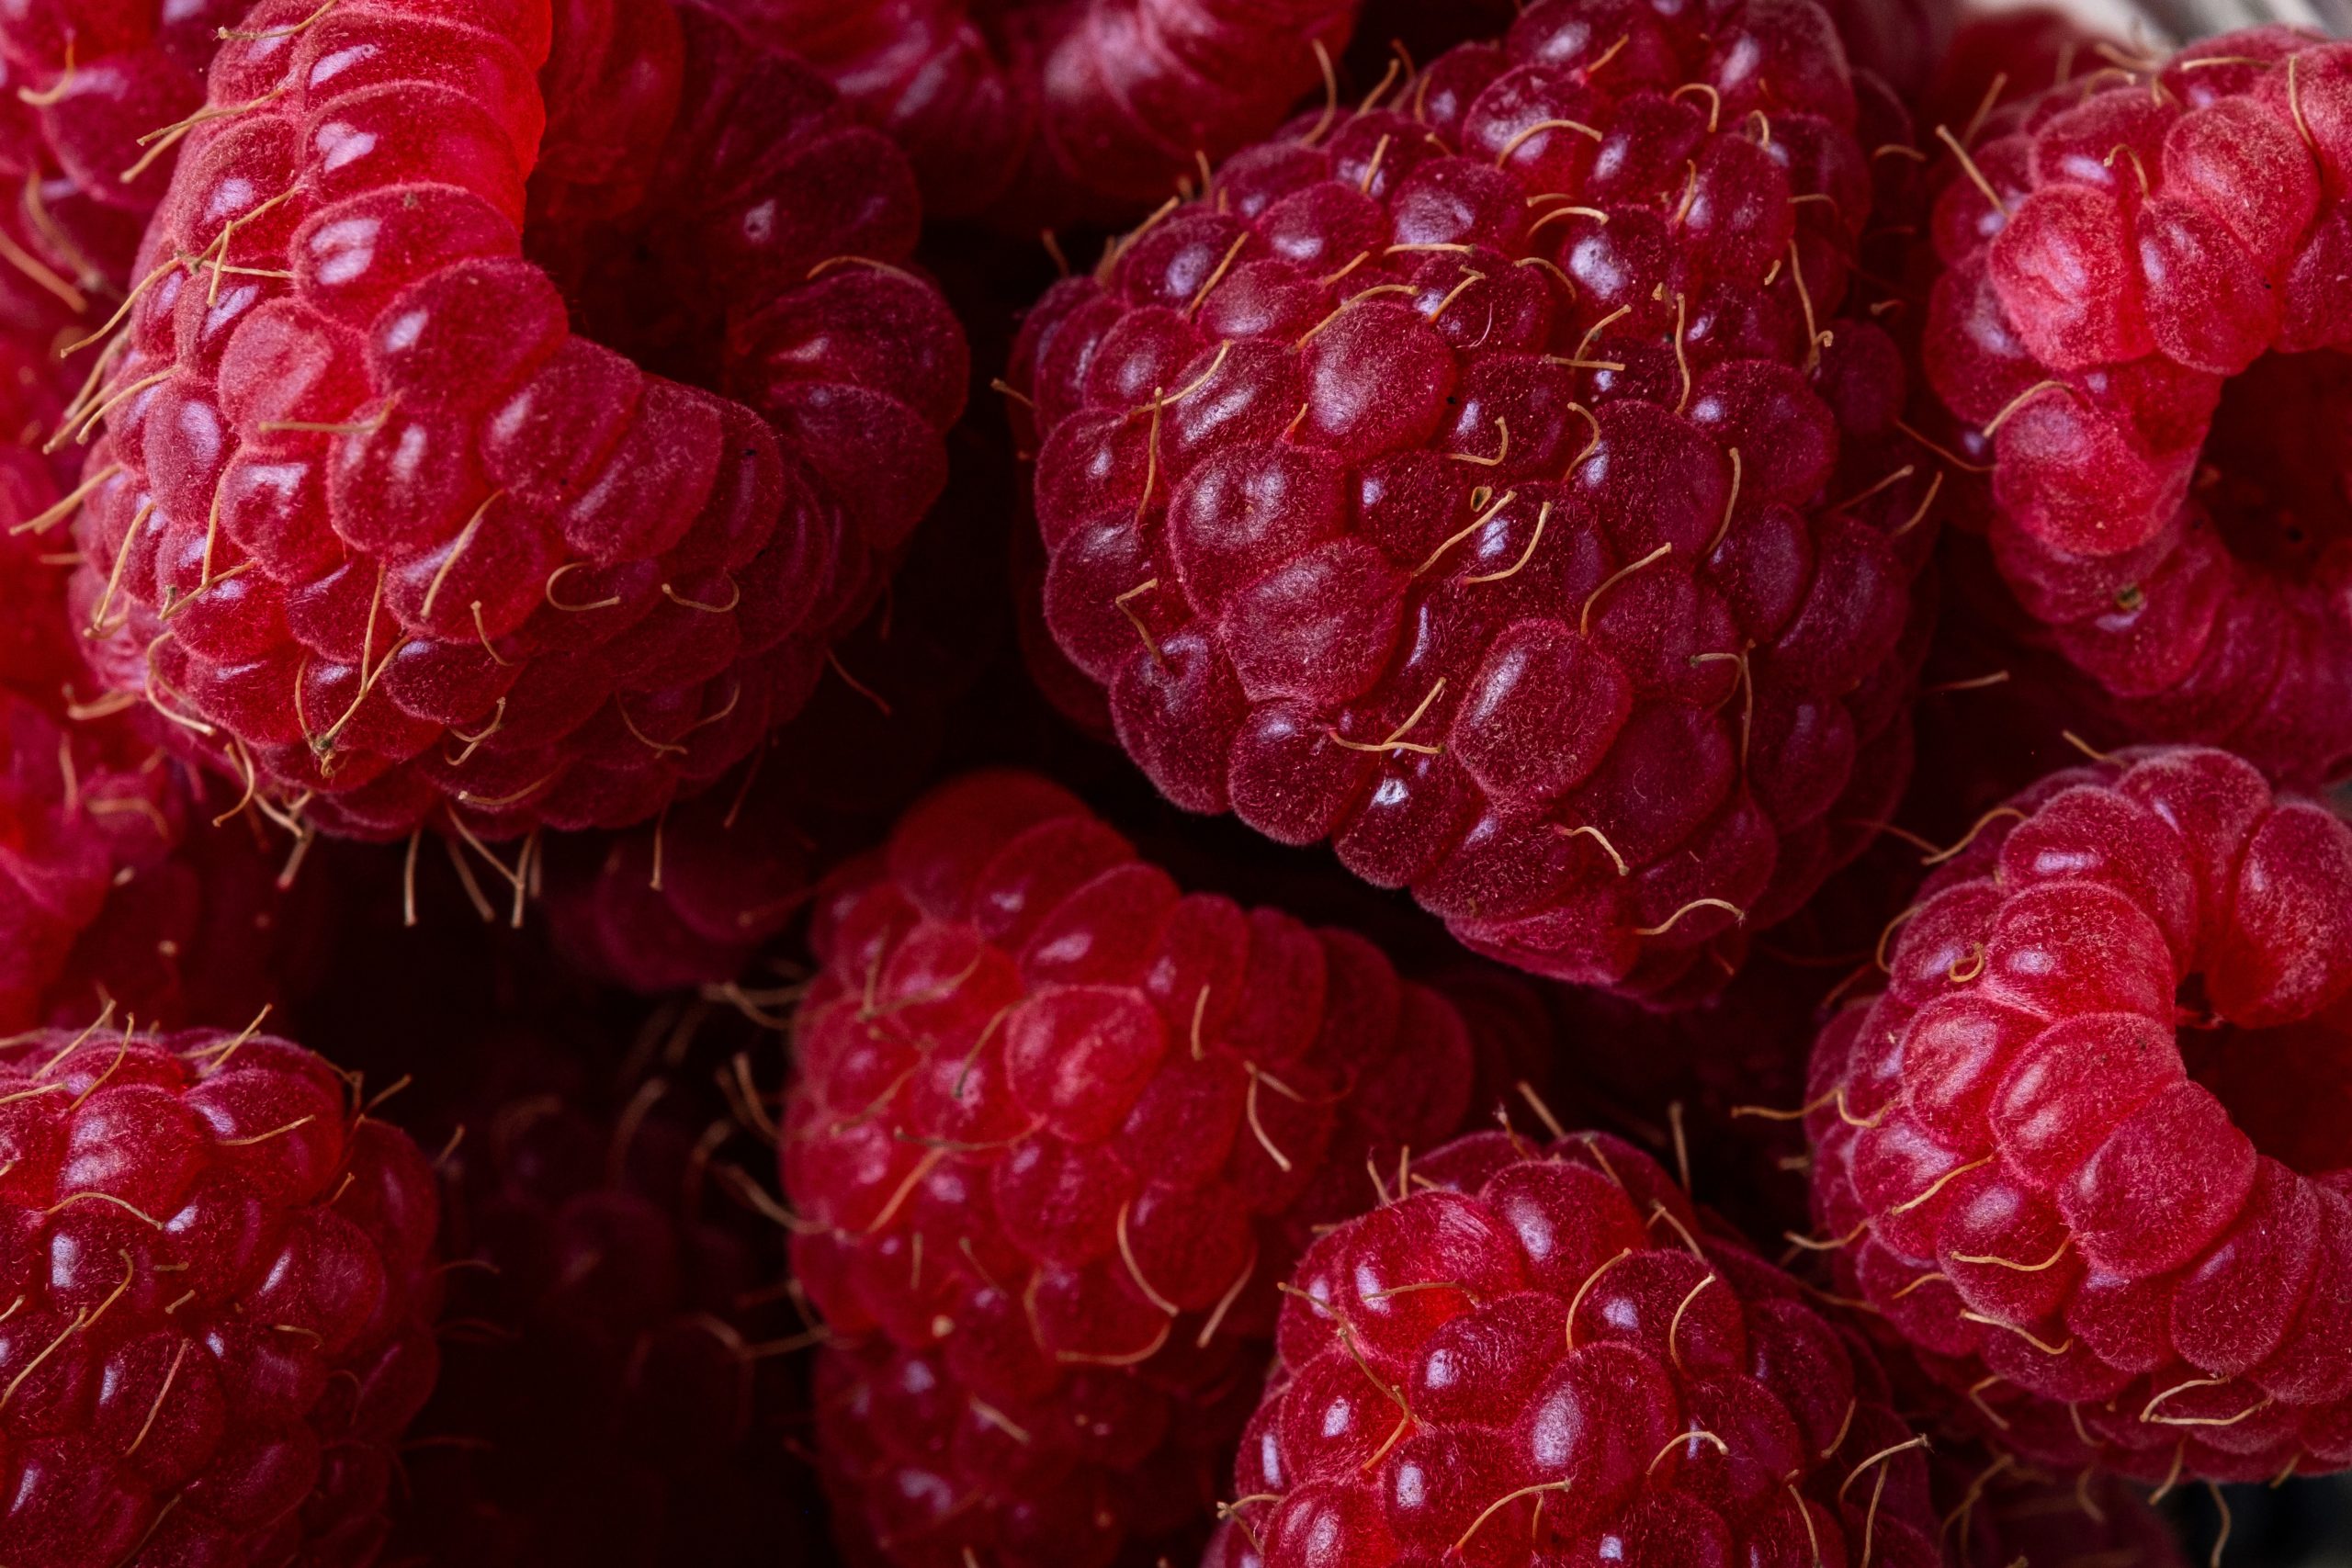 Picture of raspberries